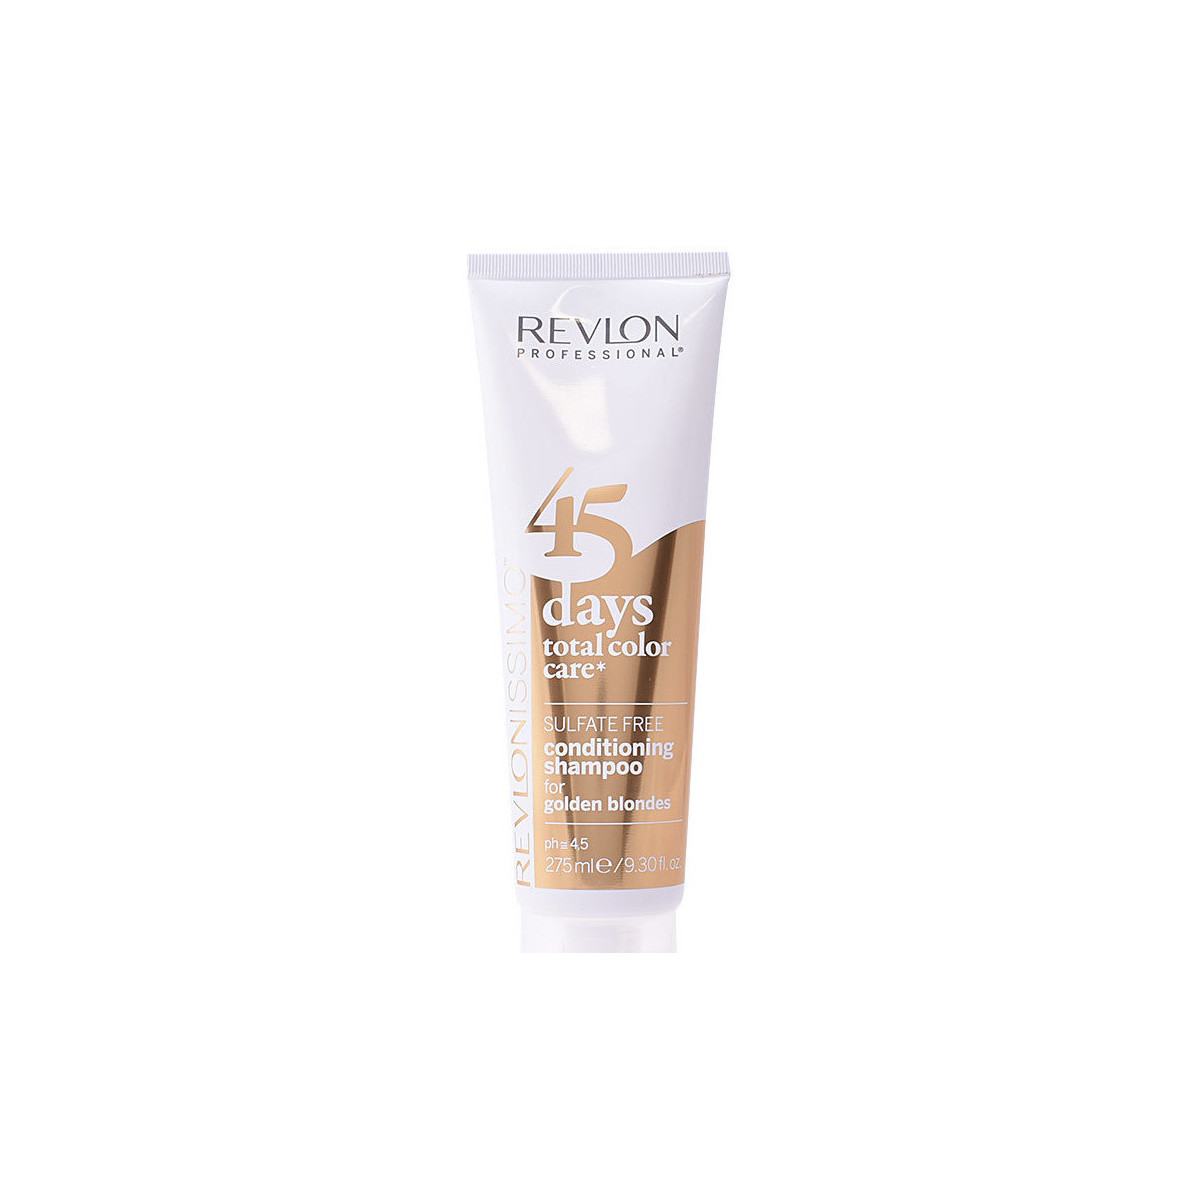 Bellezza Shampoo Revlon 45 Days Conditioning Shampoo For Golden Blondes 